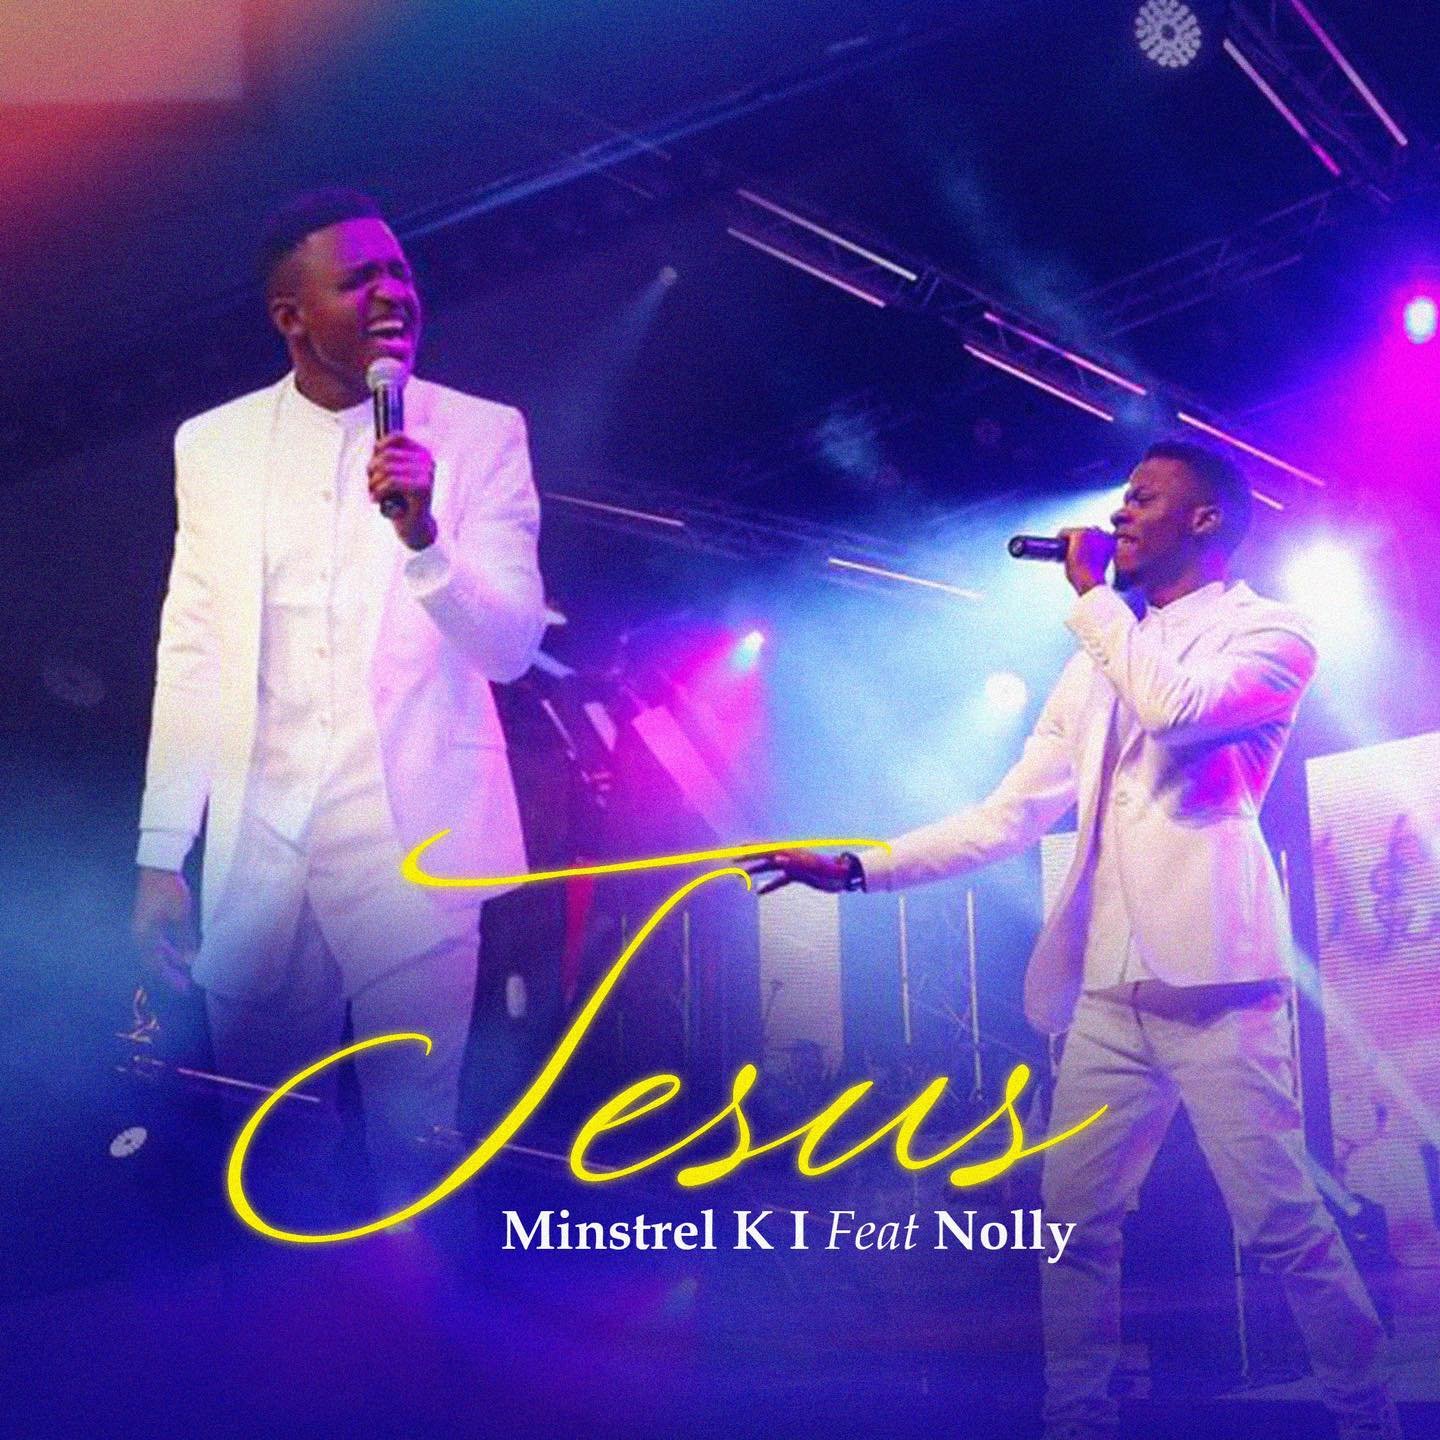 Minstrel Ki releases Jesus (Ft Nolly) (Mp3 Download)